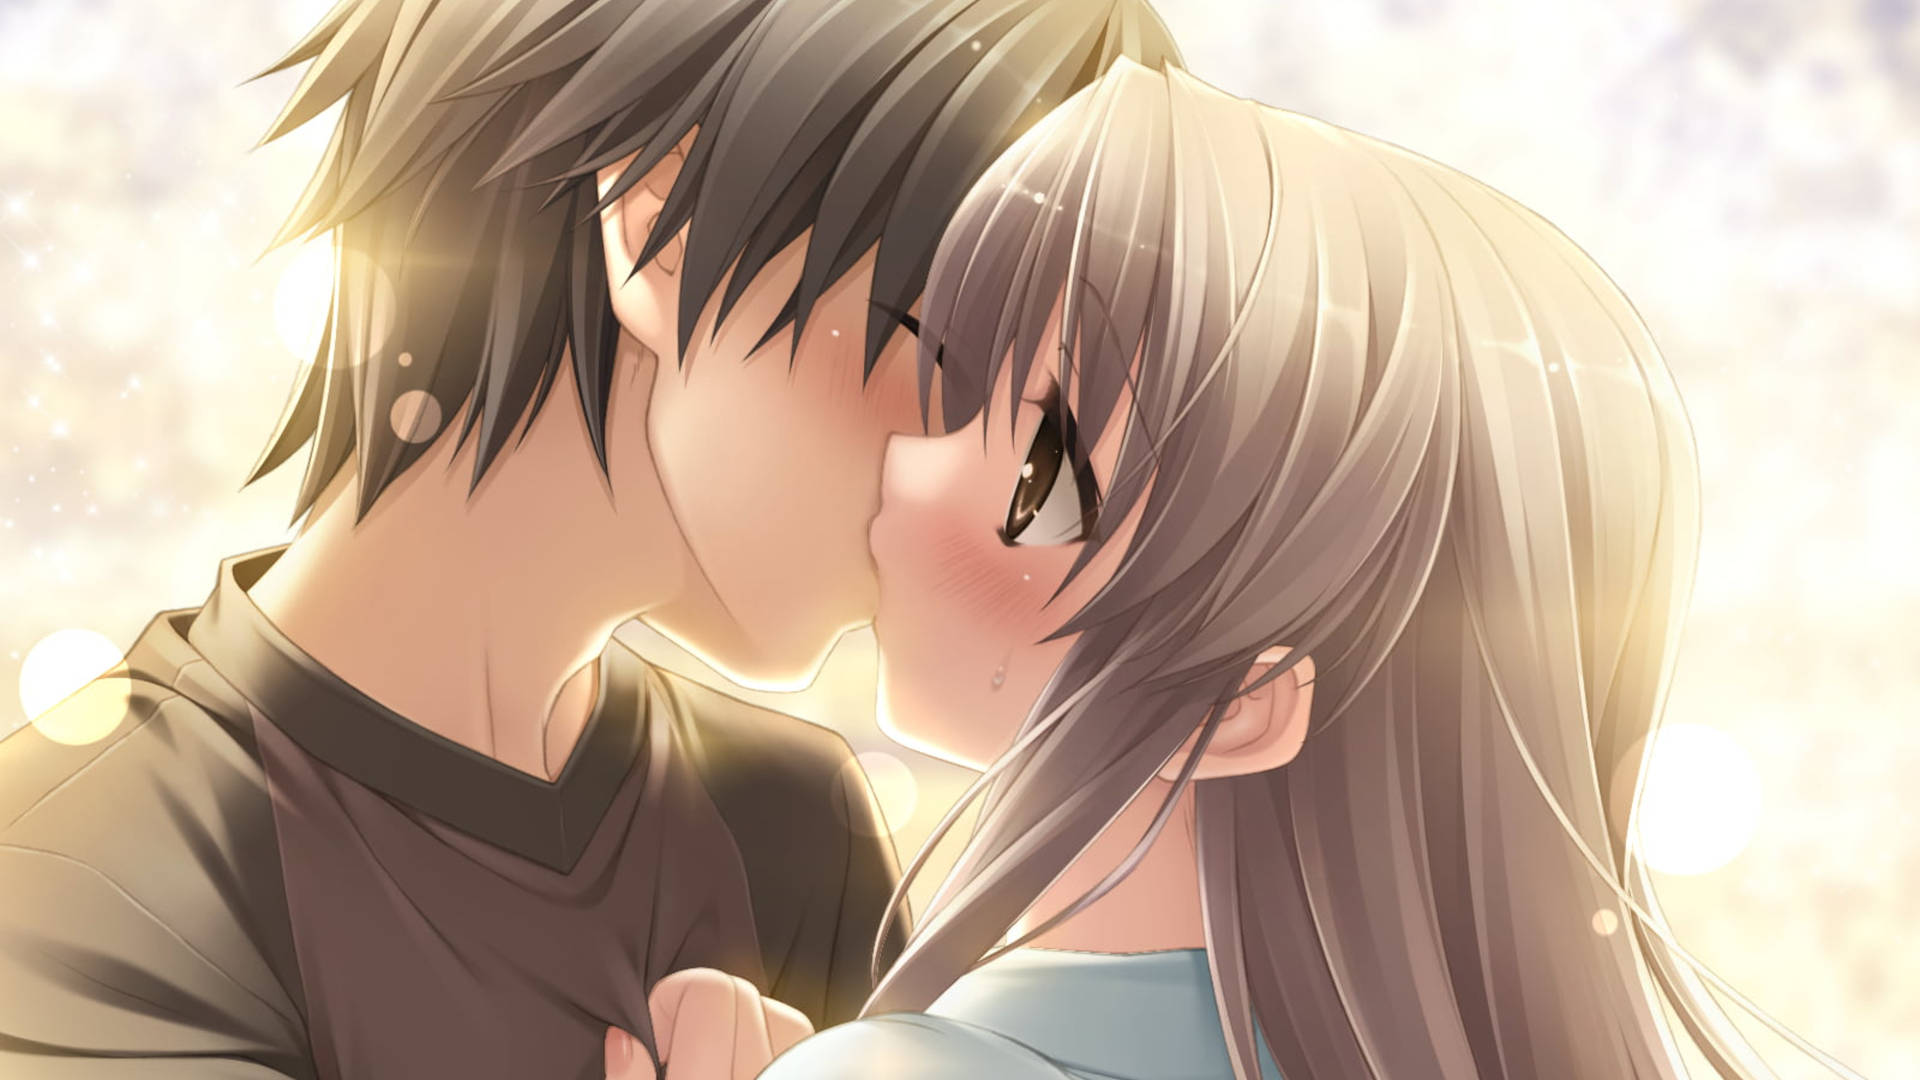 Cute Anime Couple Kiss In Soft Lighting